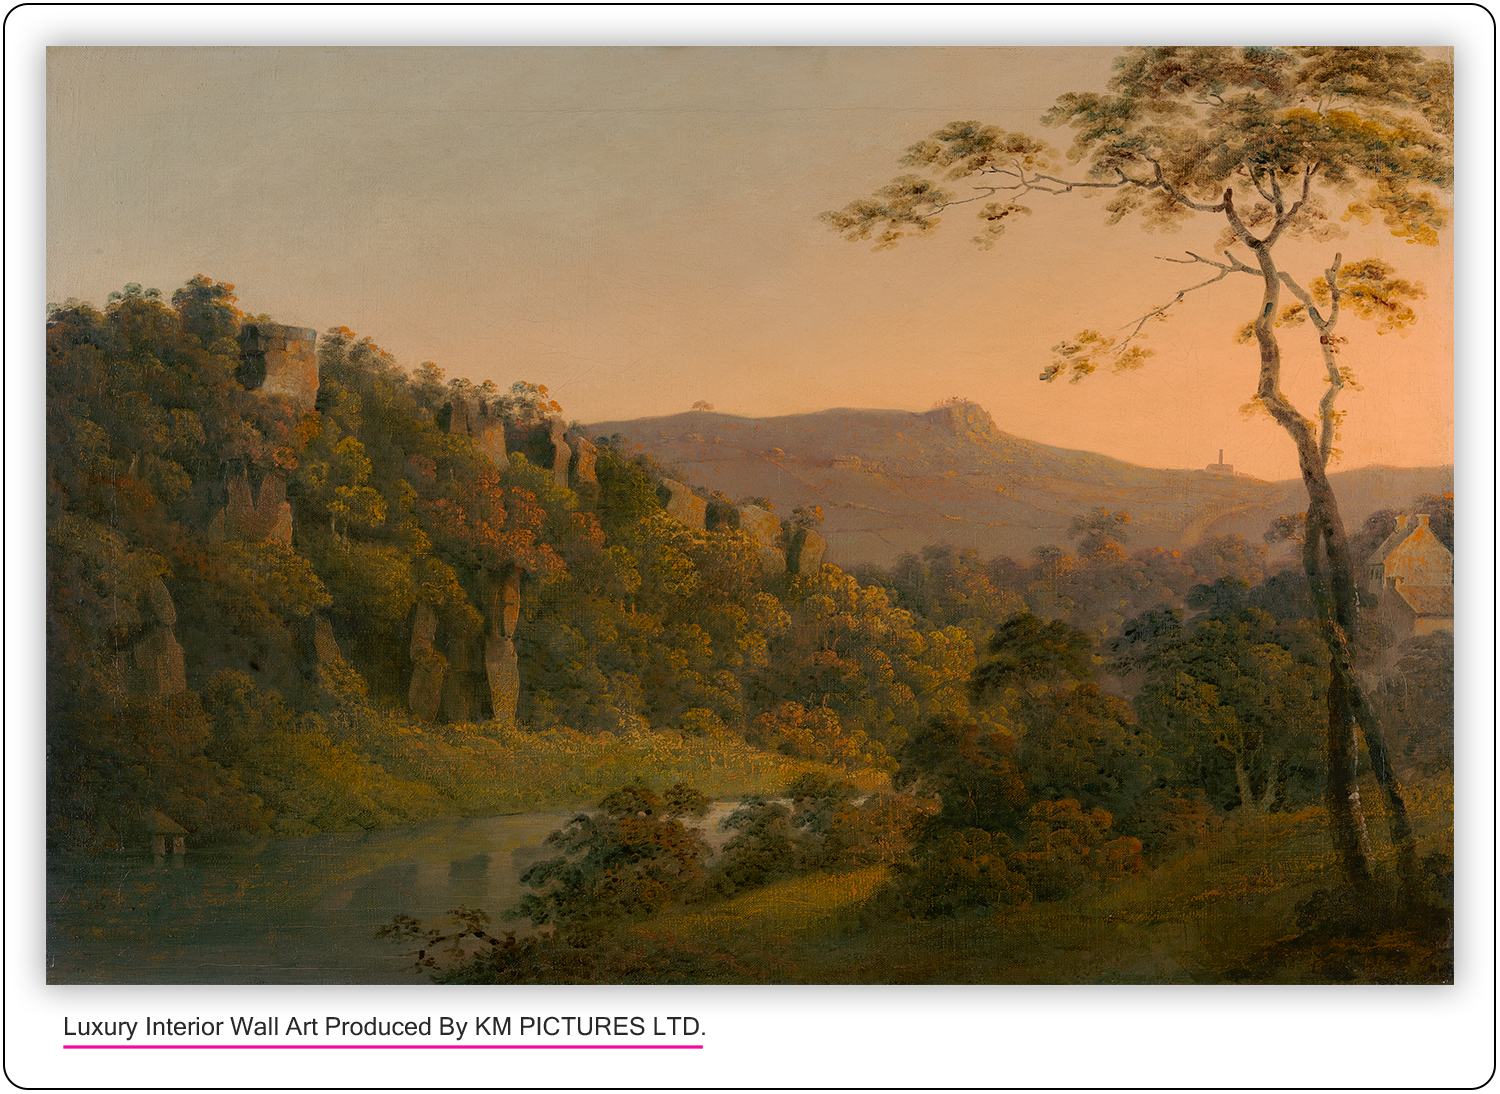 Matlock Dale, looking toward Black Rock Escarpment, between 1780 and 1785